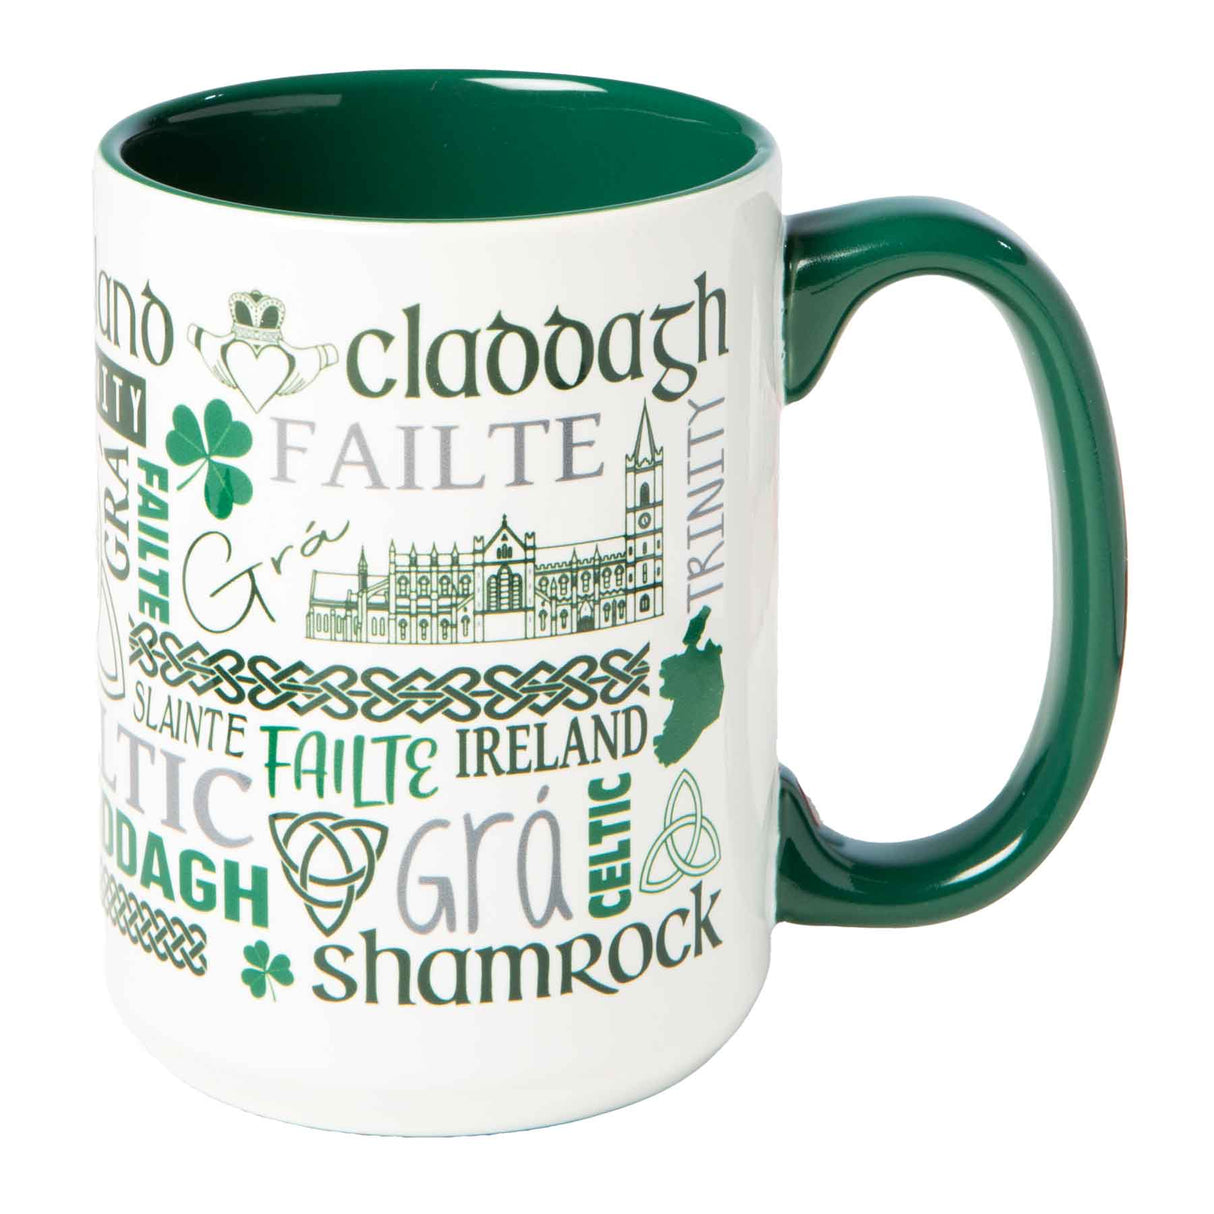 Celtic Word Wrap Mug - Creative Irish Gifts